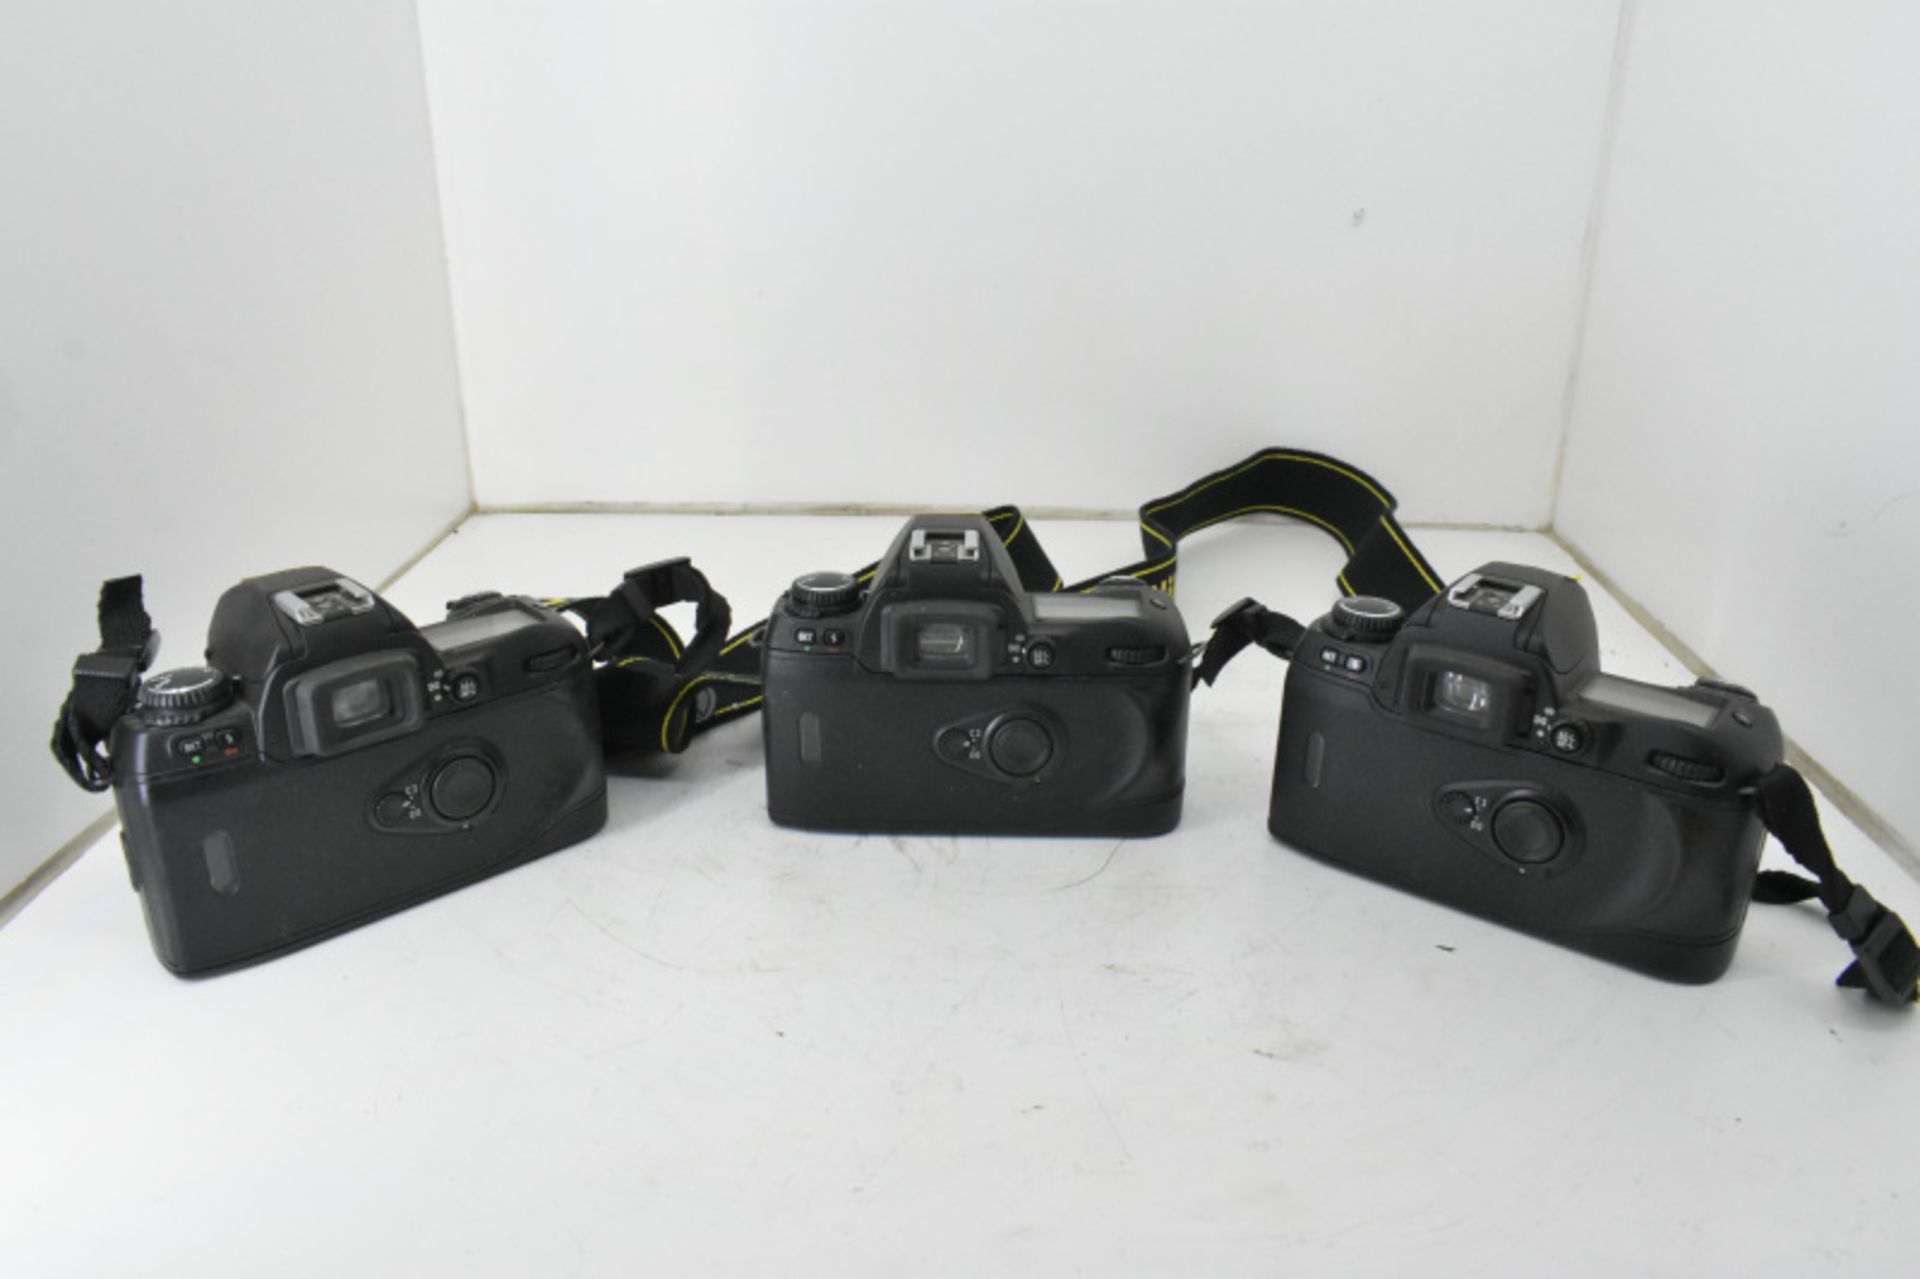 3x Nikon F80 Film Camera Bodies - Image 2 of 2